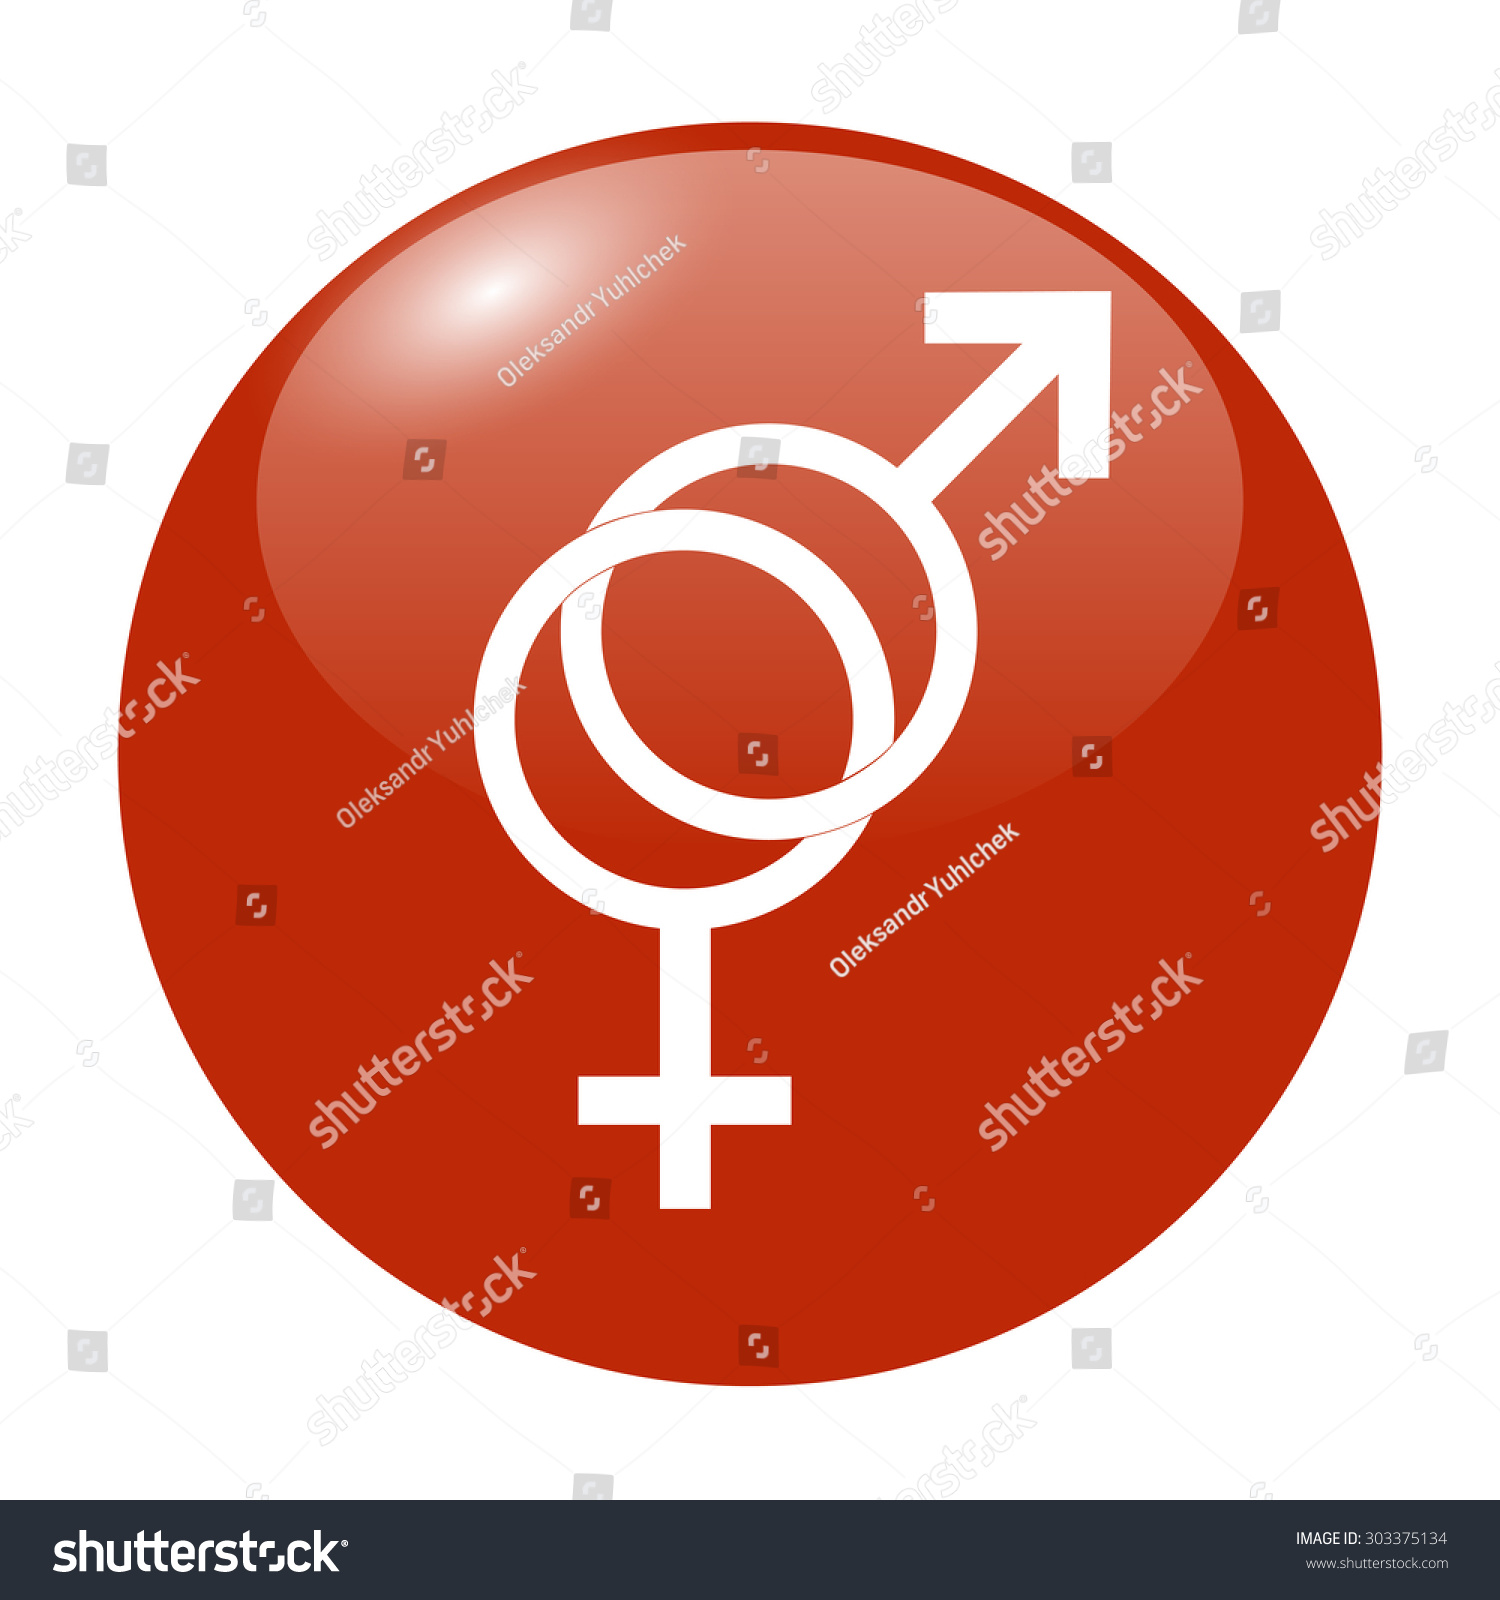 Male Female Sex Symbol Vector Illustration Stock Vector Royalty Free 303375134 Shutterstock 2744